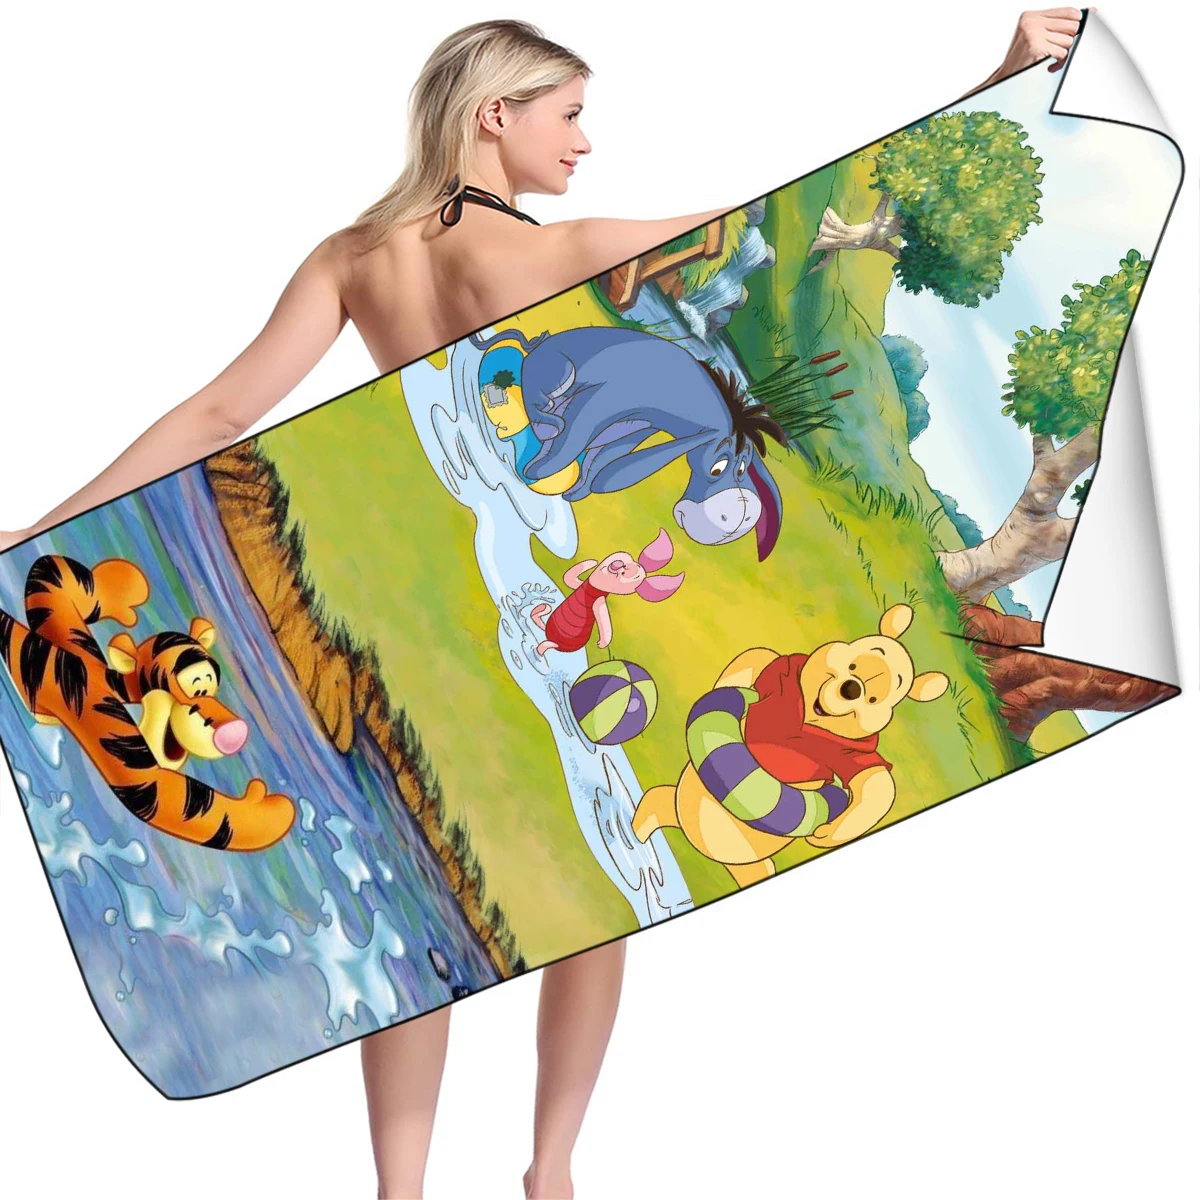 https://ae01.alicdn.com/kf/S4bae119ef3f34951b201537d88309becm/Disney-Winnie-the-Pooh-Bath-Towel-Anime-Microfiber-Home-Baby-Beach-Towel-Kids-Swimming-Washcloth-Cartoon.jpg